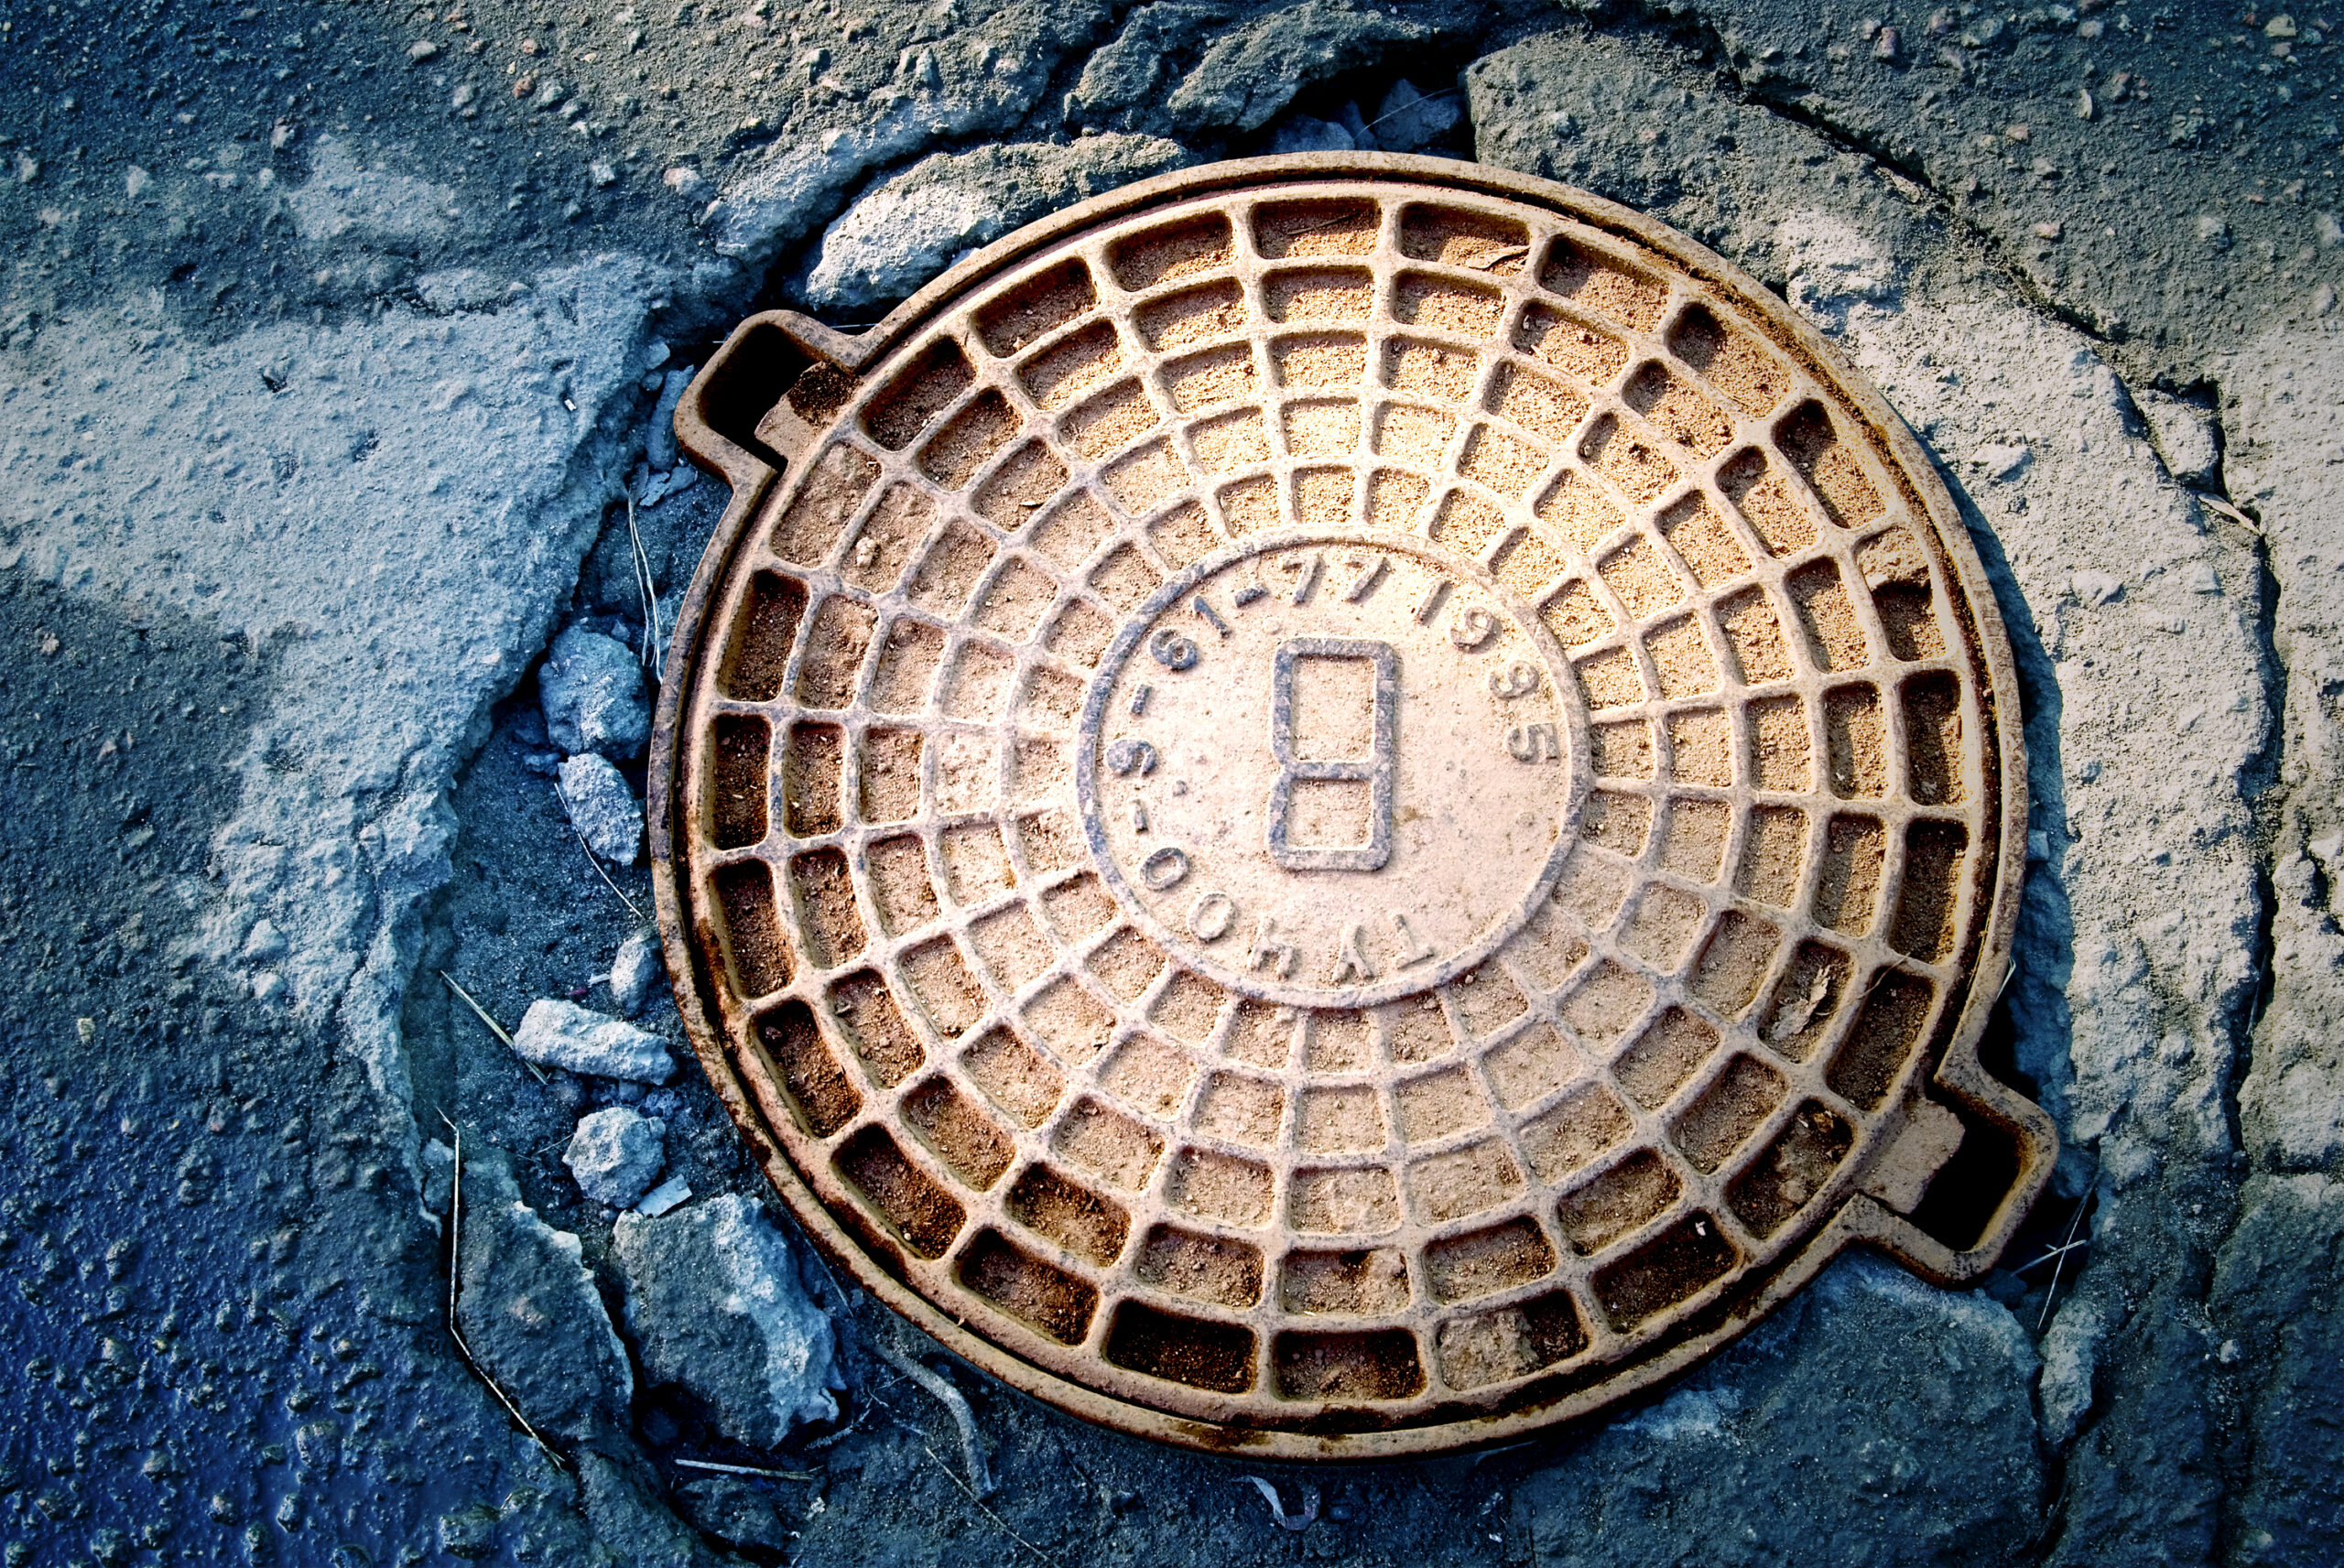 Rusty manhole cover